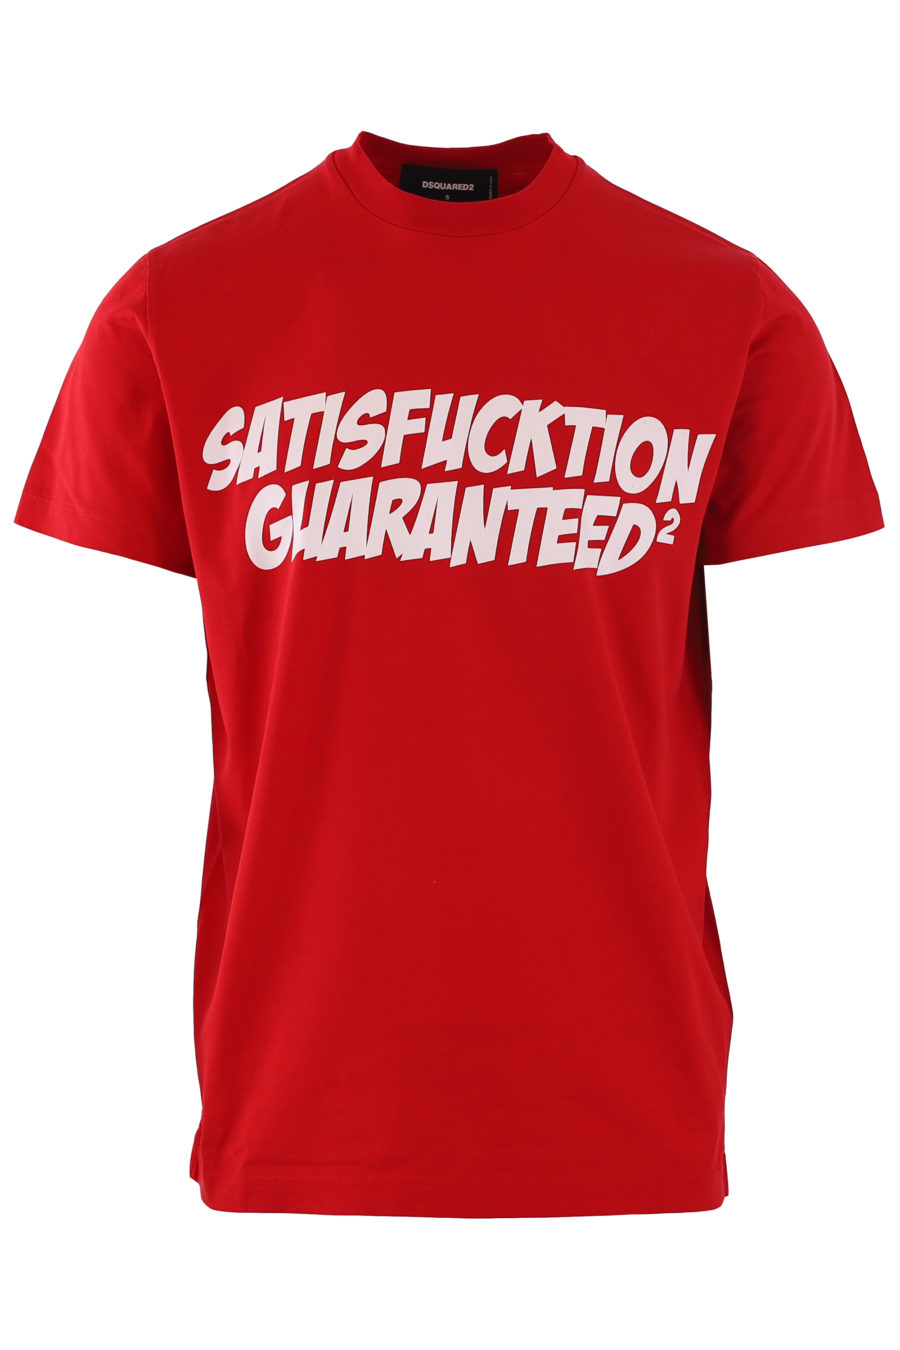 Camiseta roja "satisfacktion guaranteed2" - IMG 6815